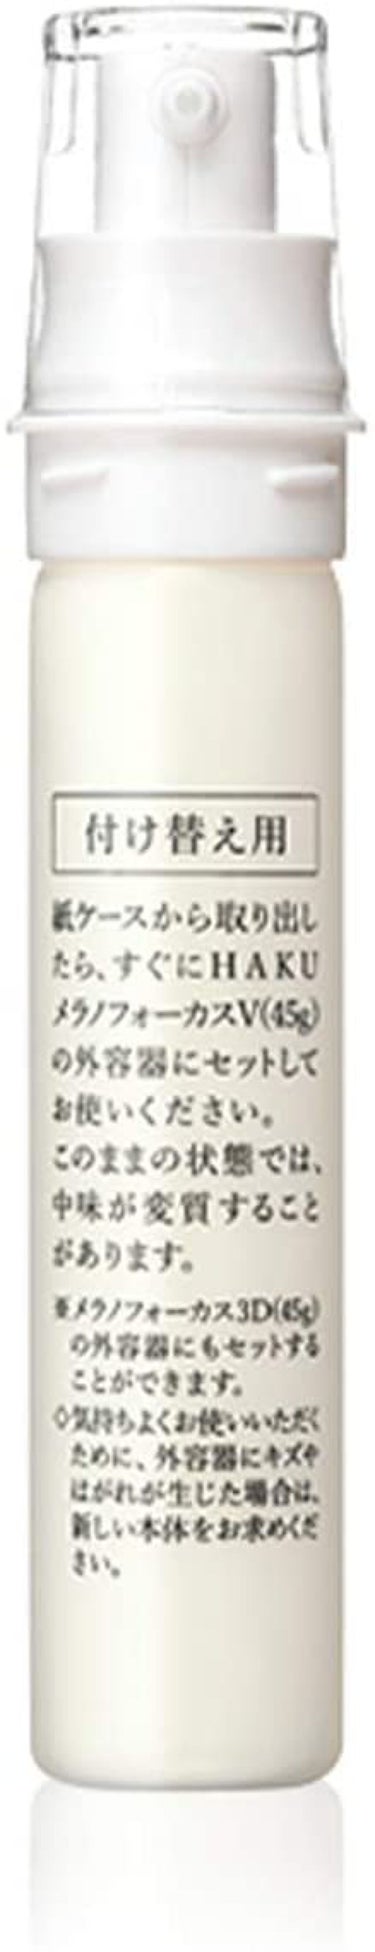 HAKU メラノフォーカスV45g レフィル 45g - 美容液